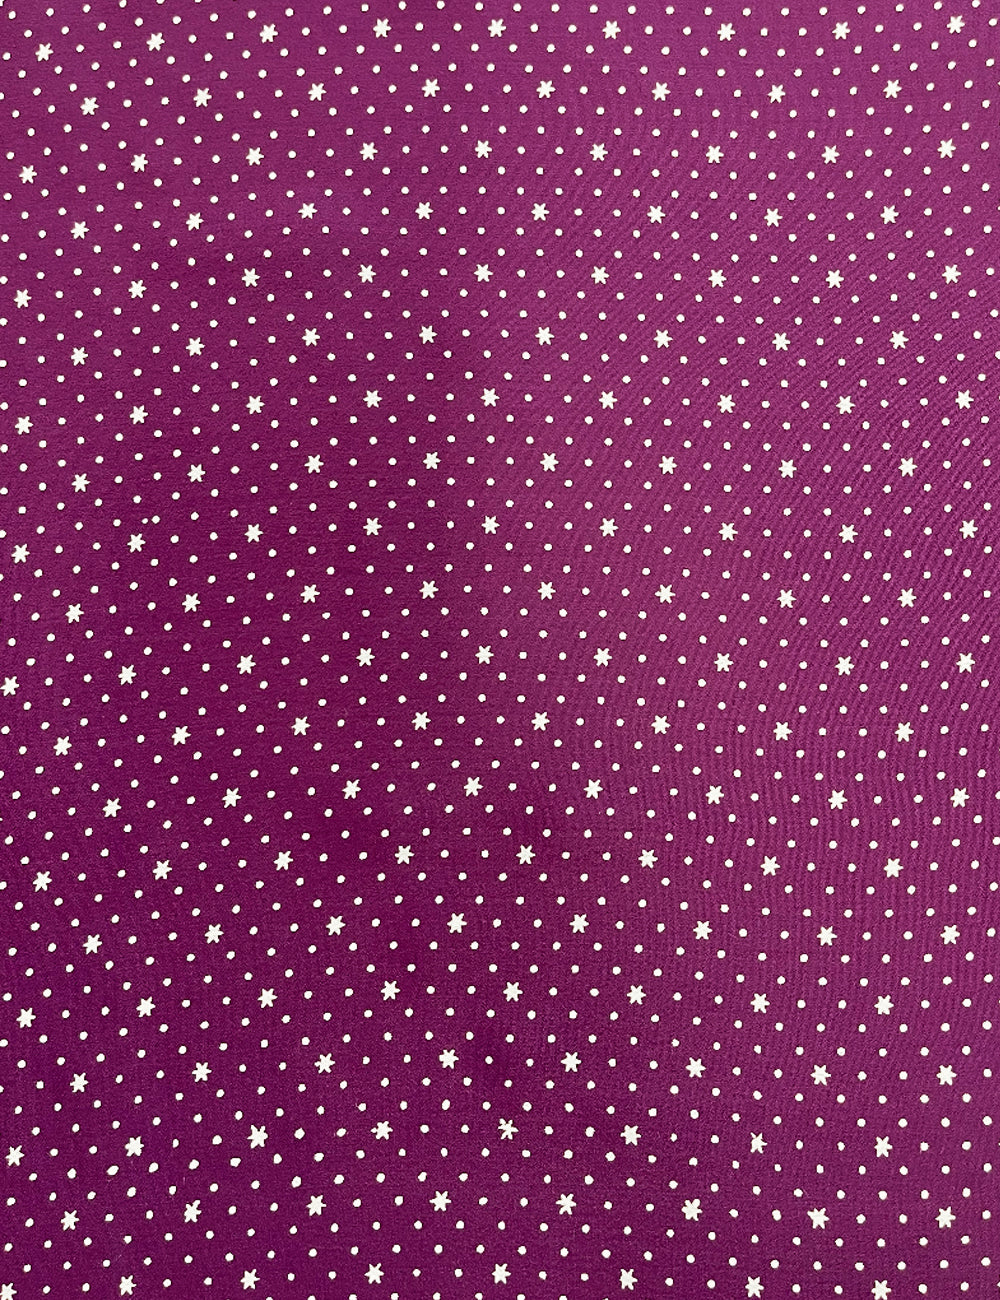 Purple Stars & Dots Fabric - 2.5 yds